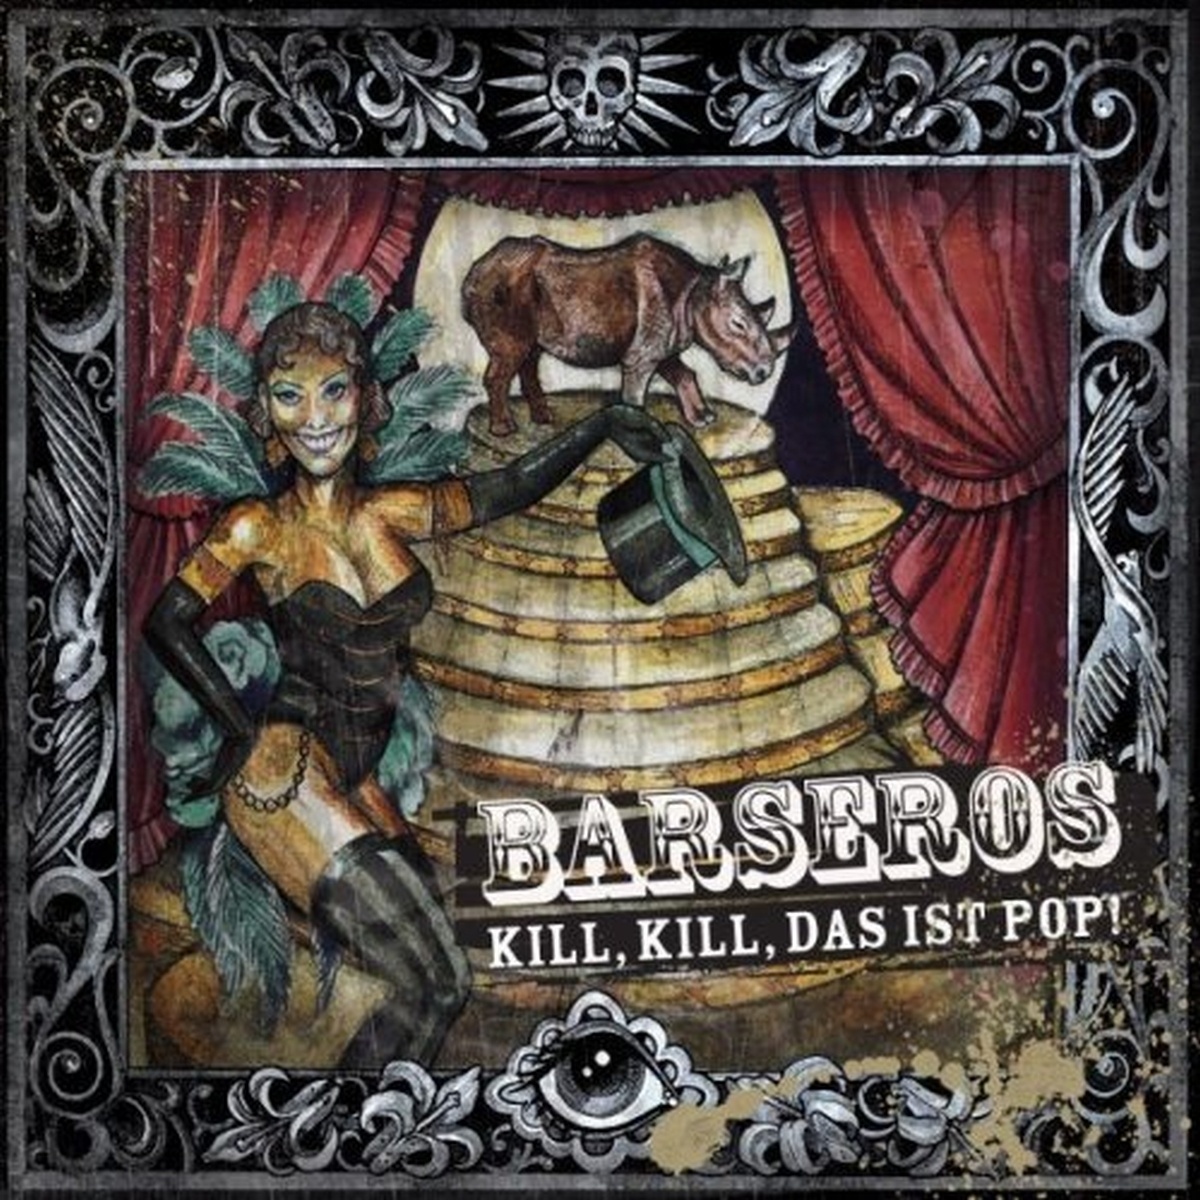 Kill  Kill  das ist Pop! - Barseros. (CD)